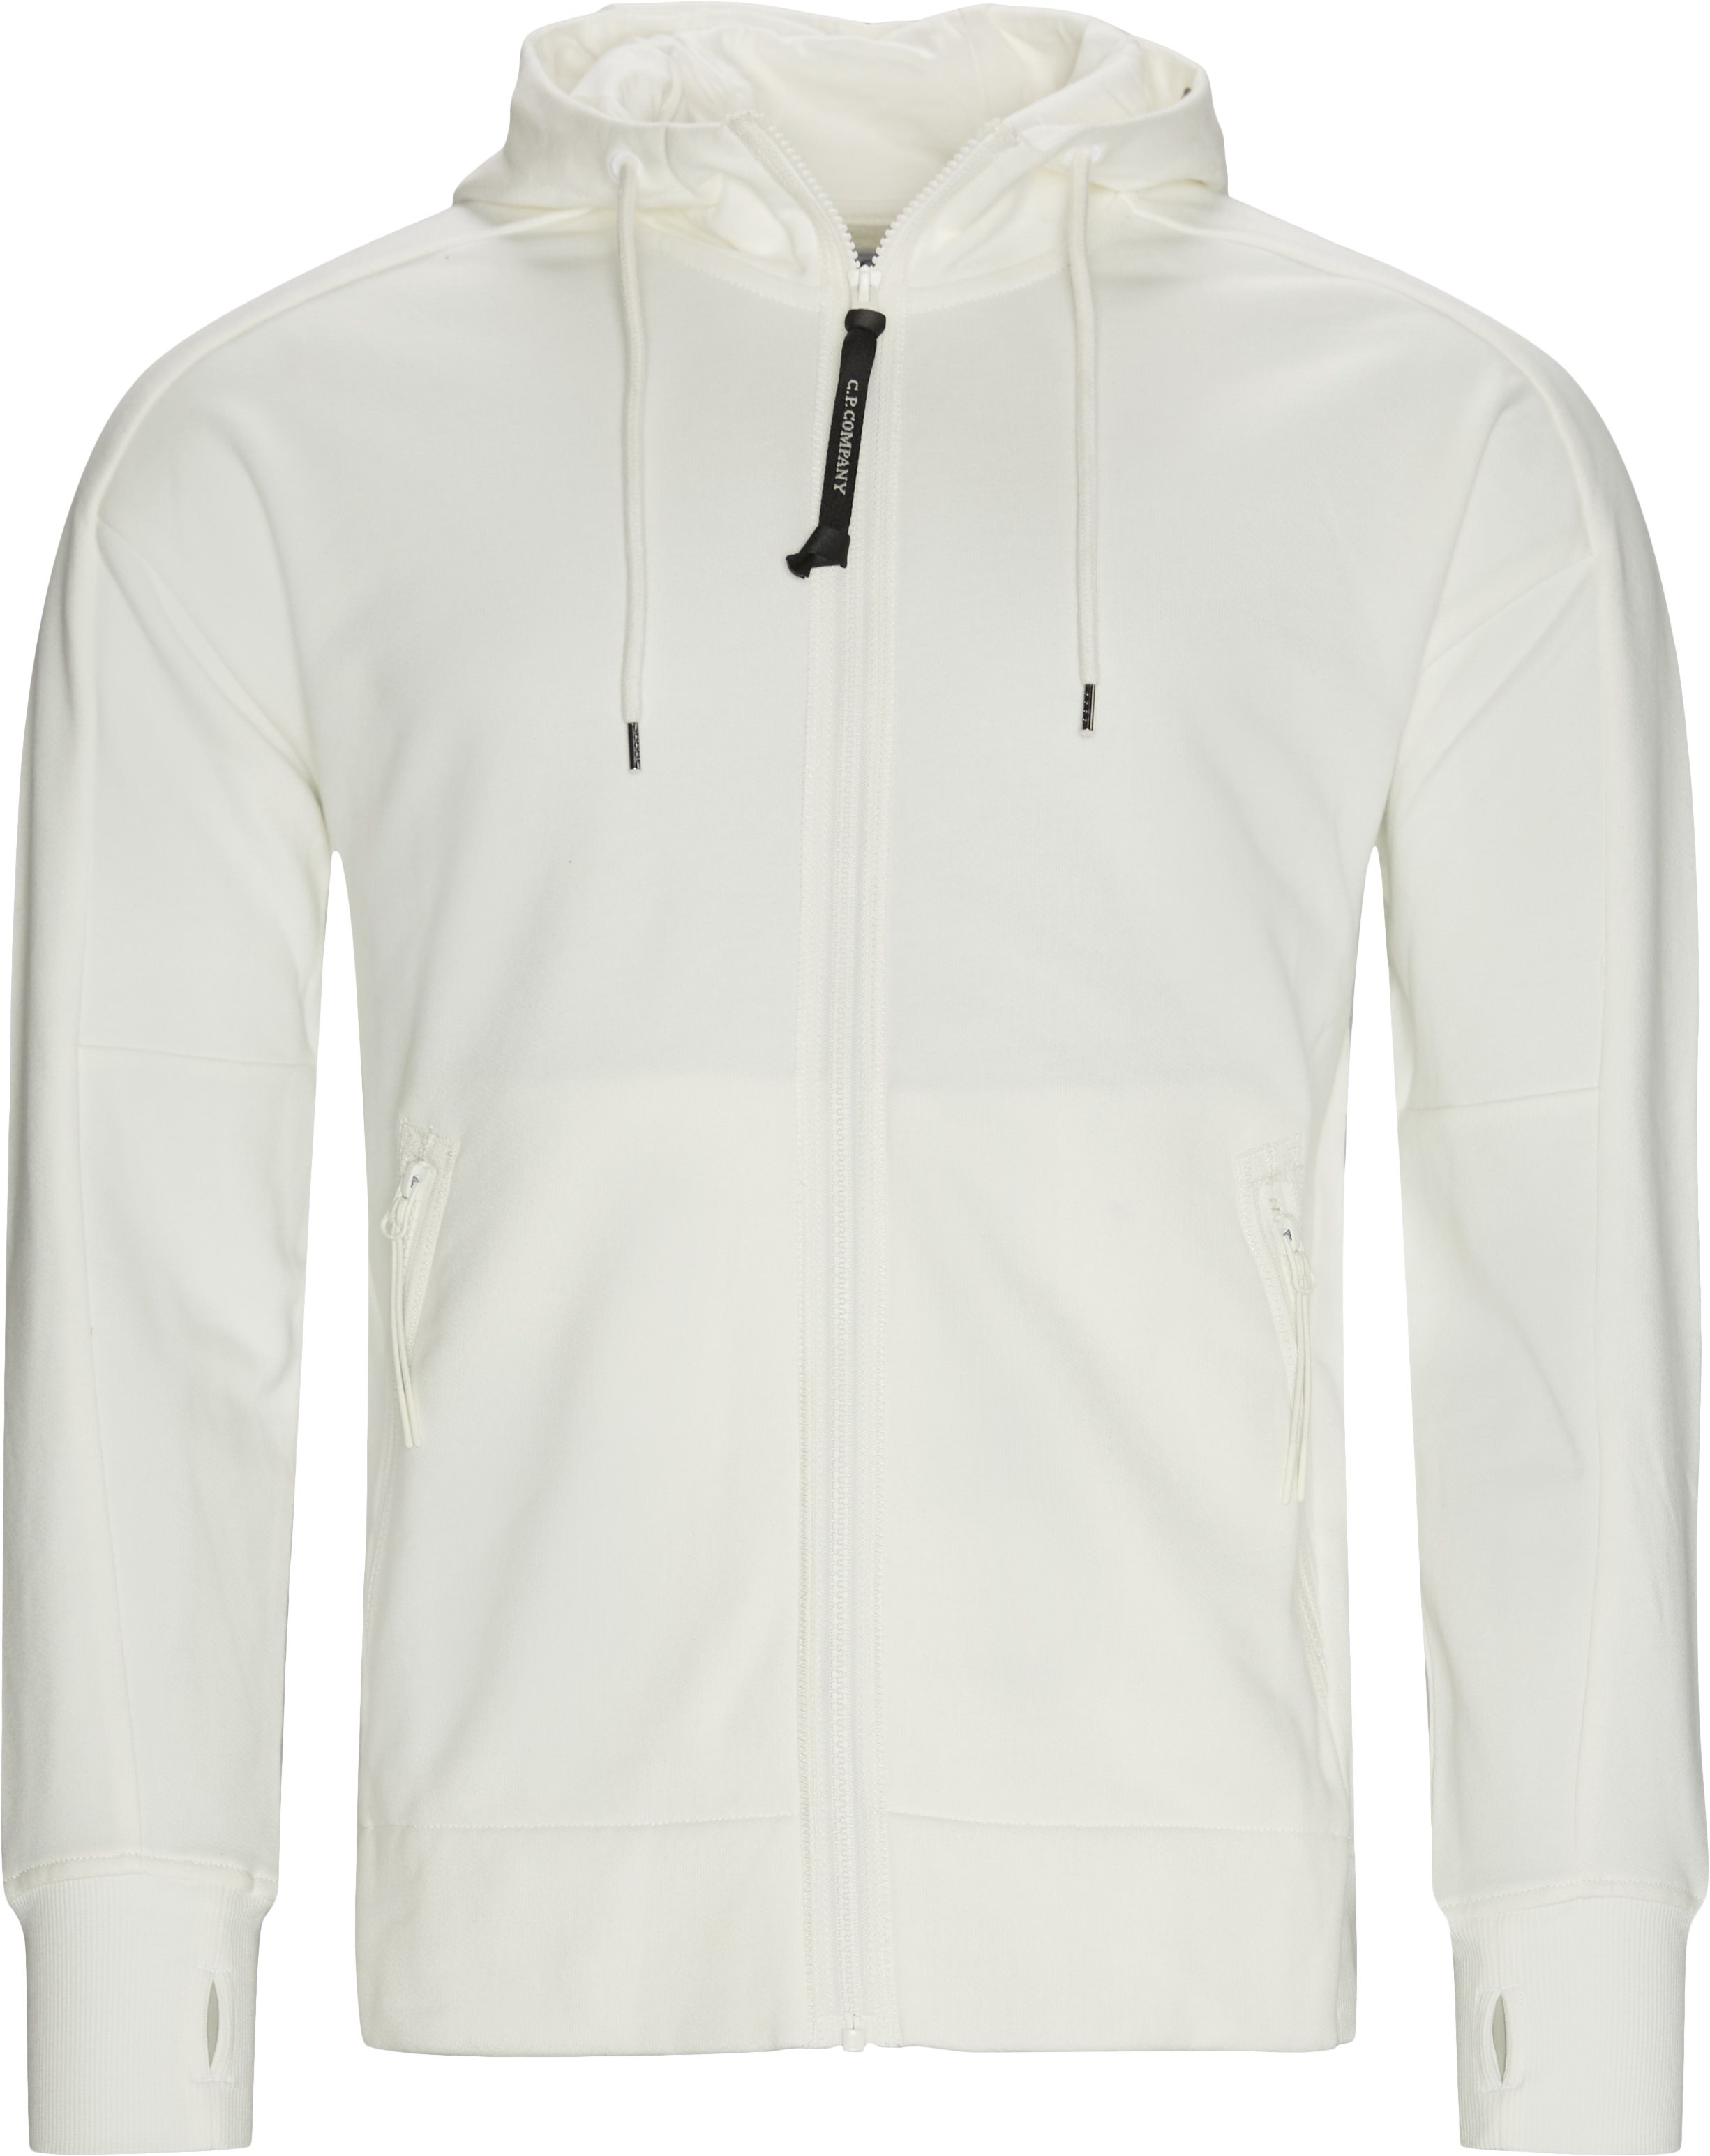 Diogonal Raised Hooded Sweatshirt - Sweatshirts - Regular fit - White